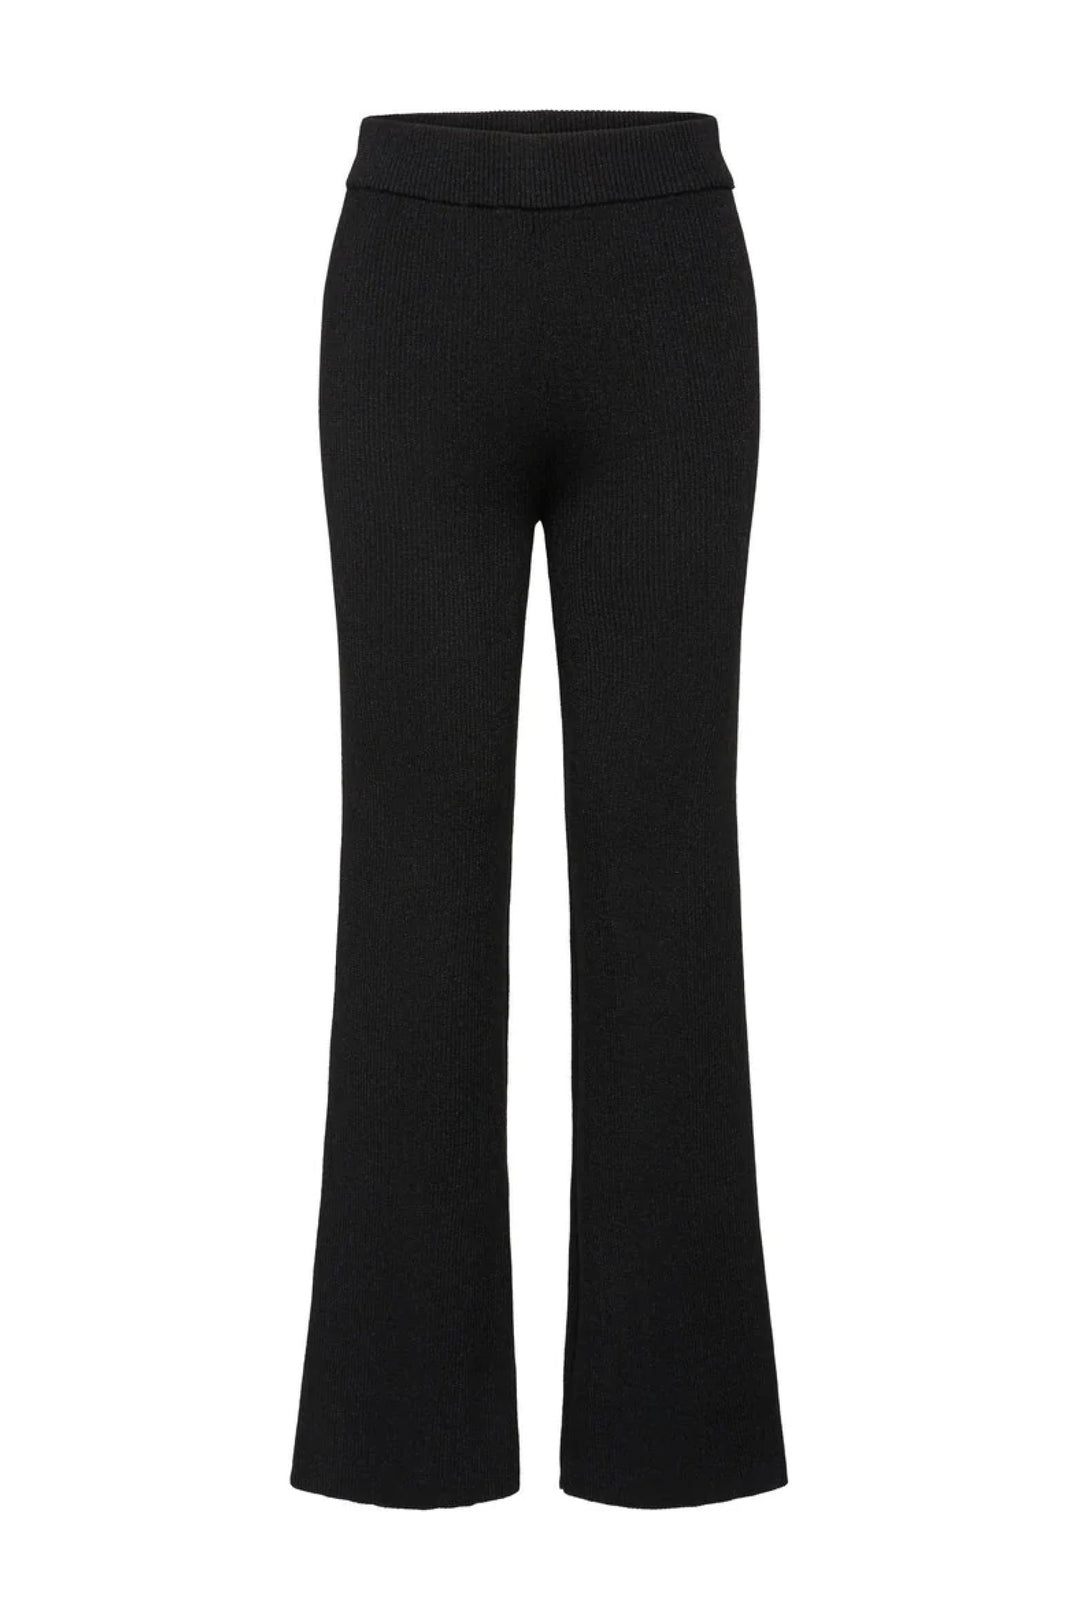 Bruuns Bazaar Women AnemonesBBLyna pants Pants Black / Black lurex